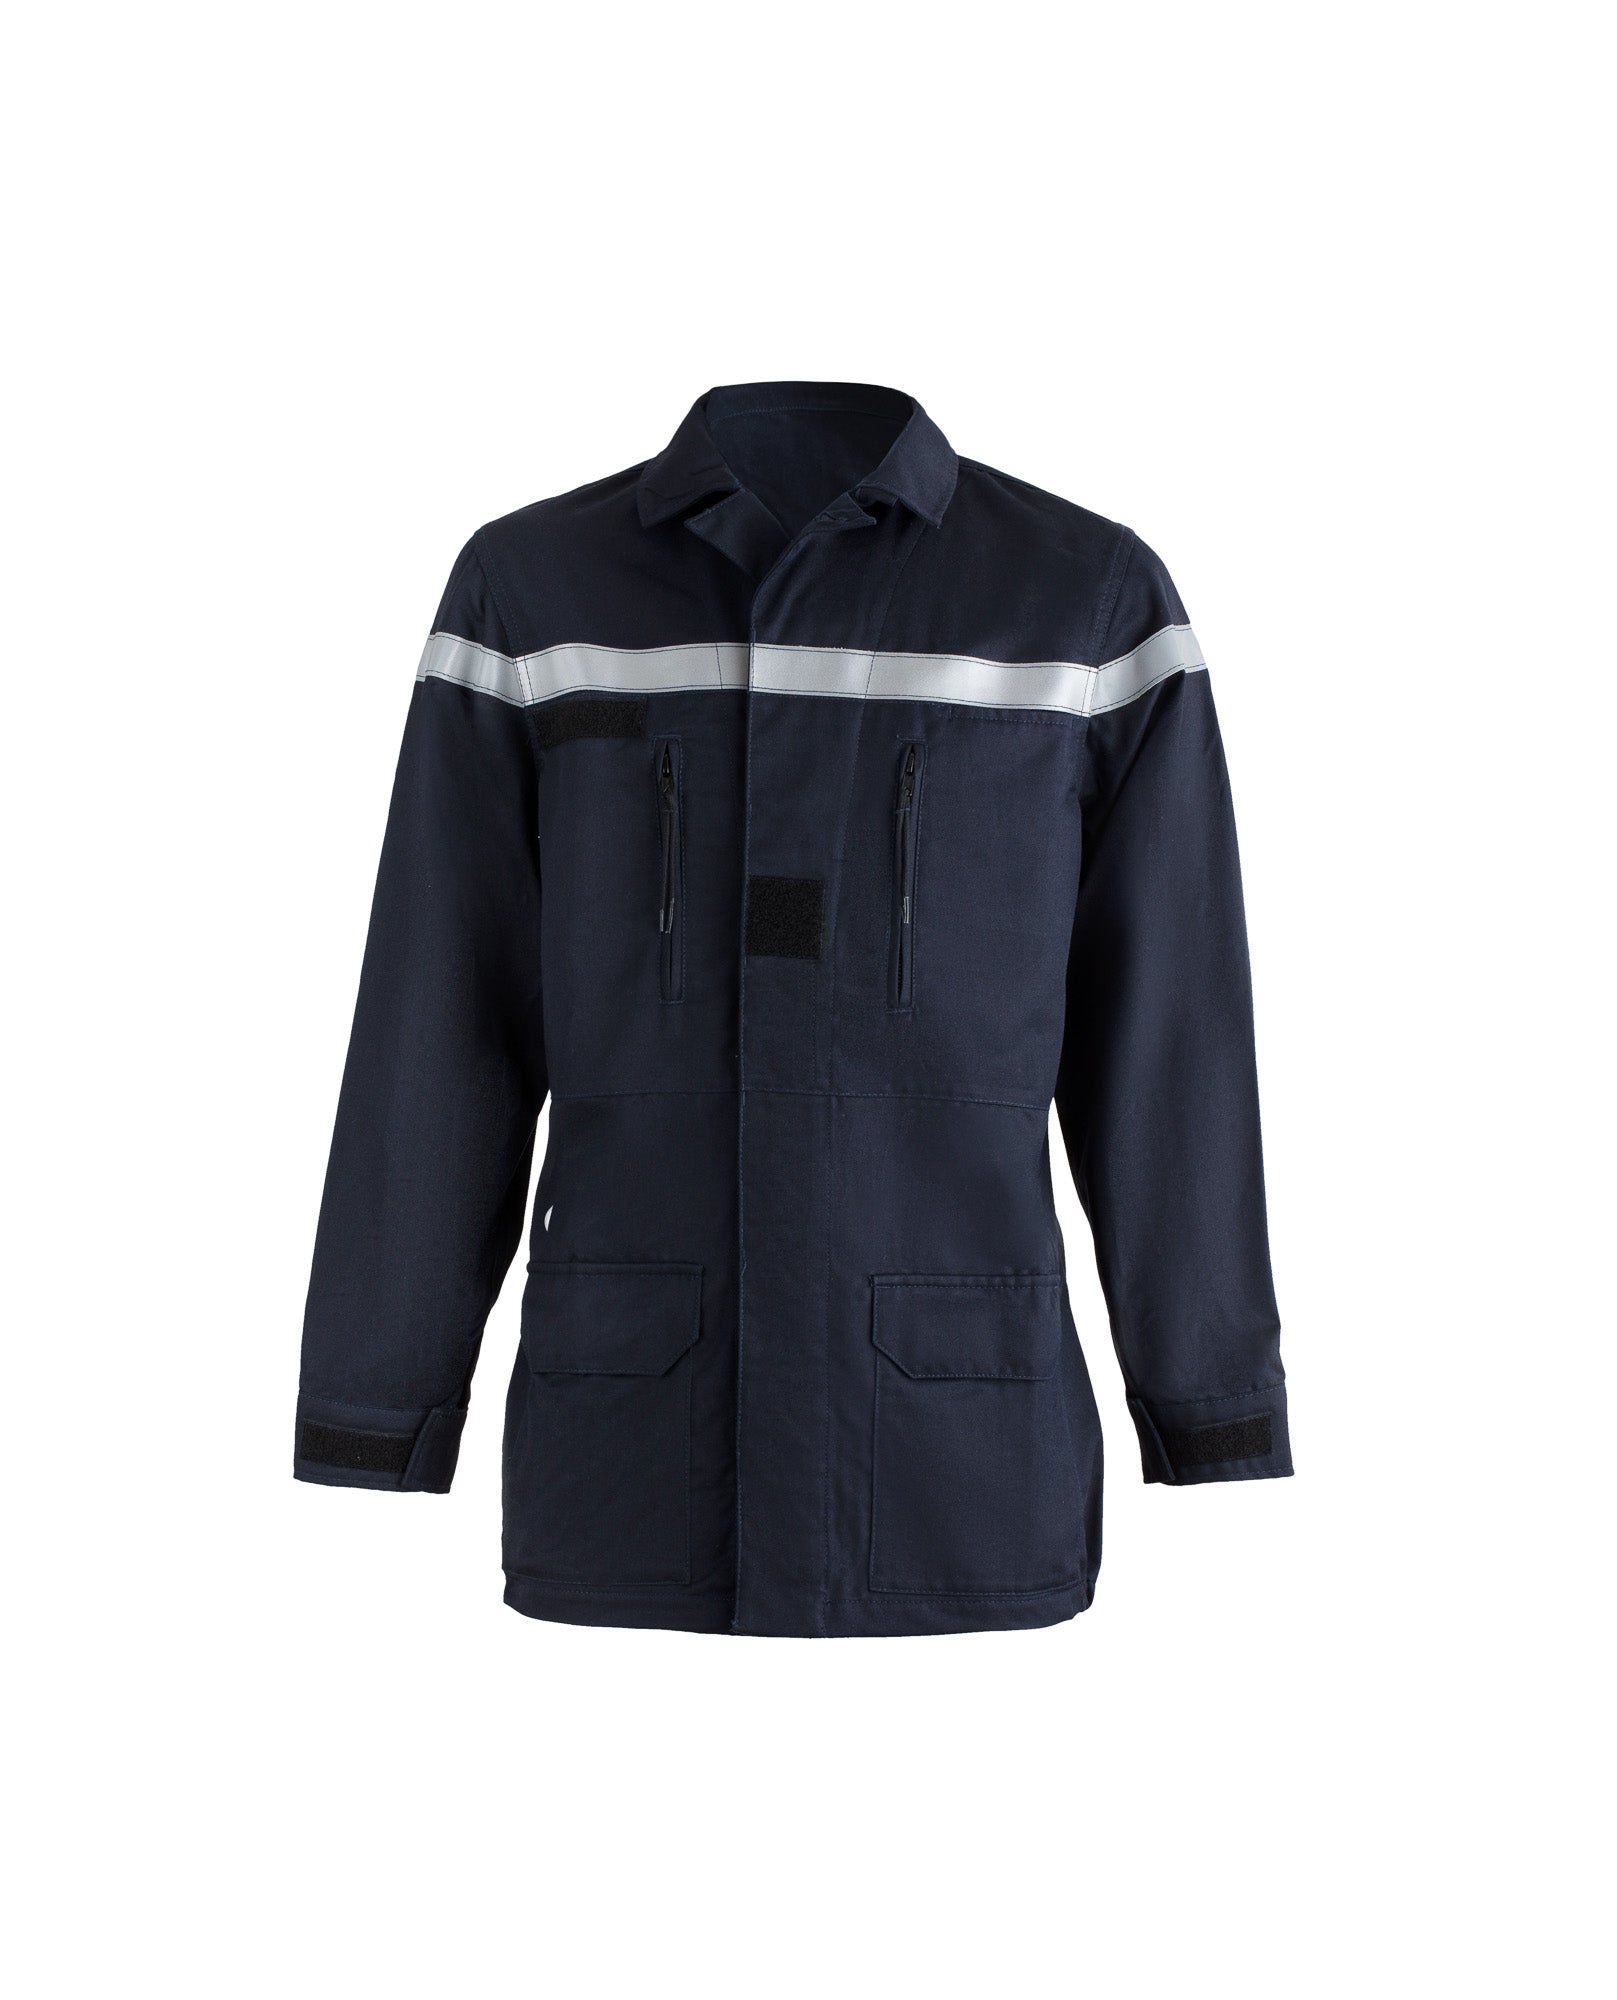 Firefighter jacket - 50032501